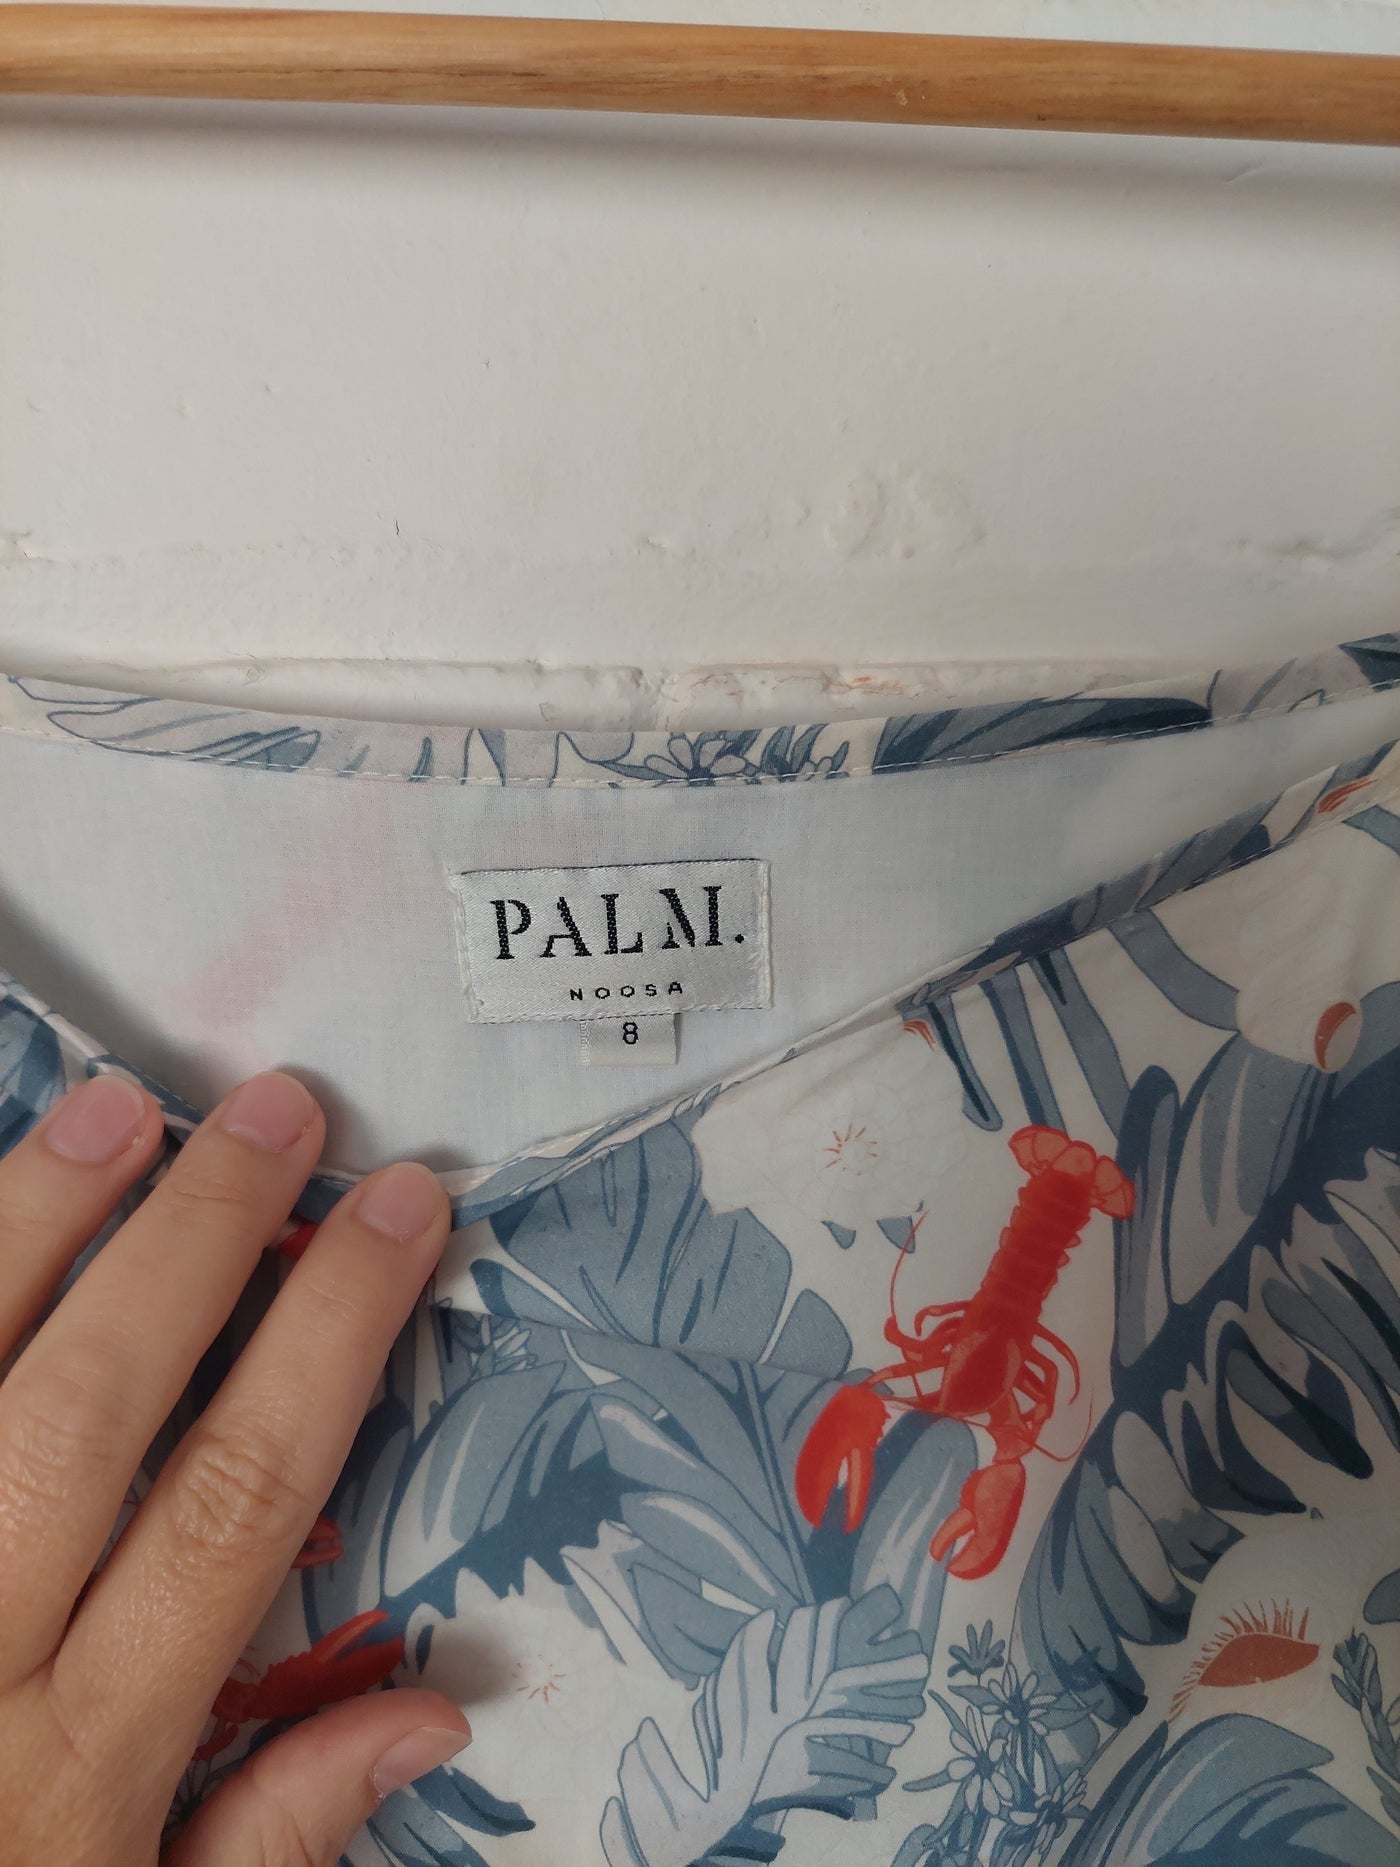 Palm Noosa 'Send Me On My Way' dress in Sea Print, Size 8